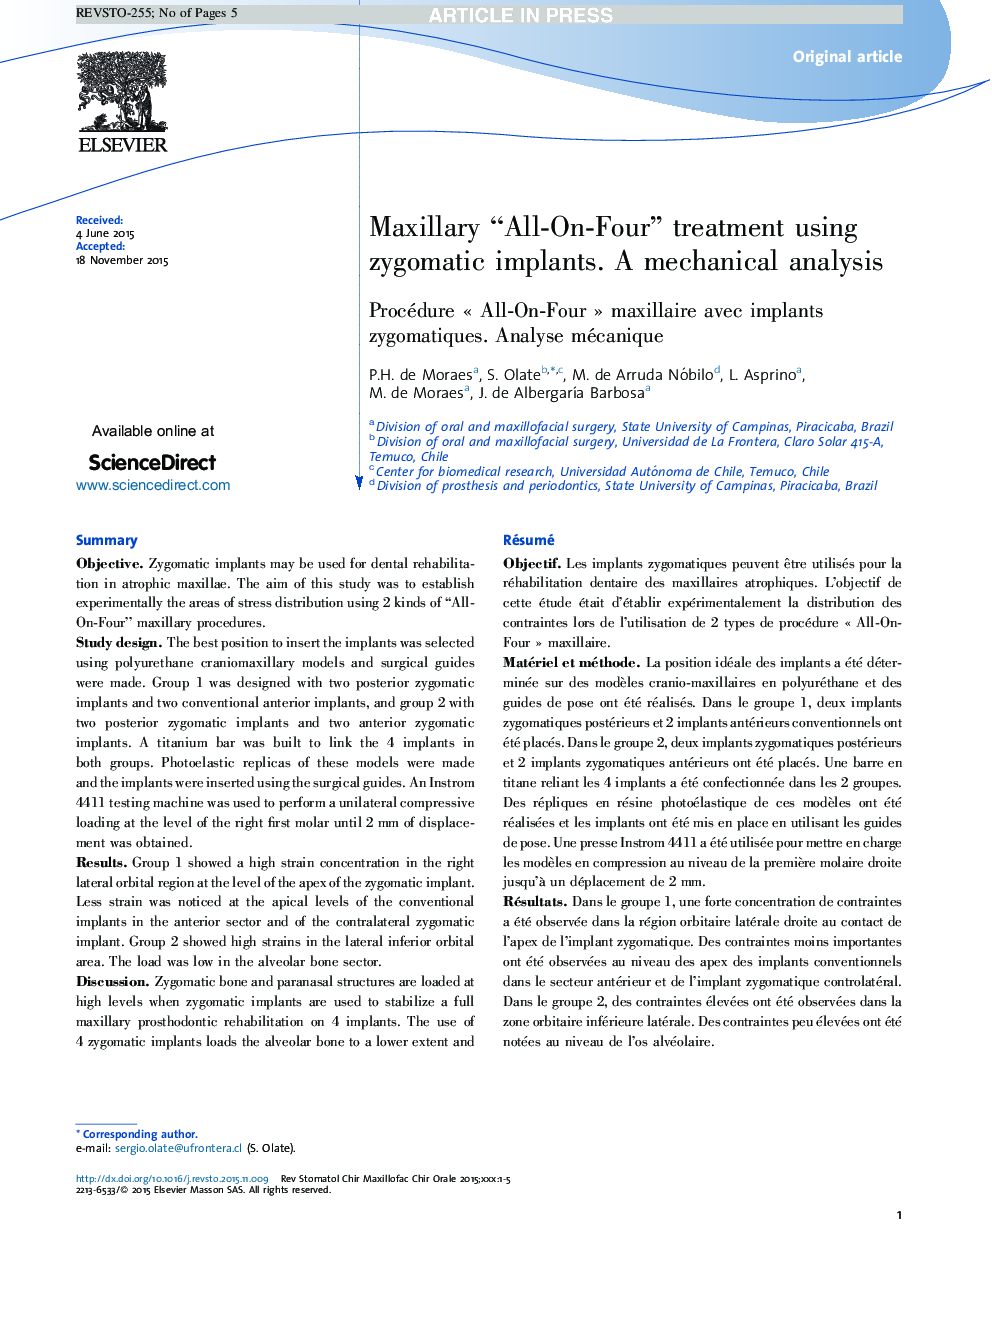 Maxillary “All-On-Four” treatment using zygomatic implants. A mechanical analysis